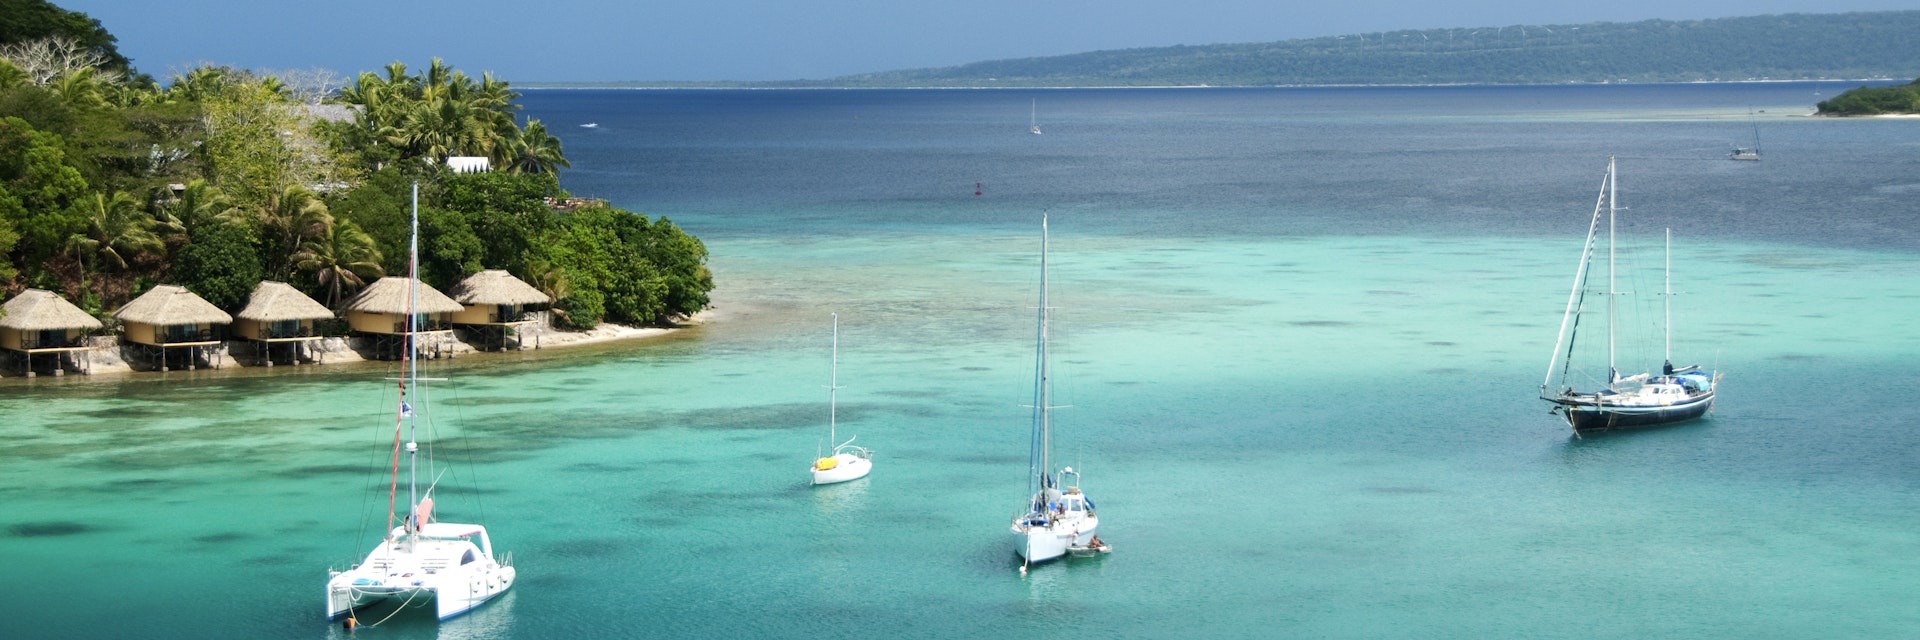 Bungalows on Iririki Island and yachts on Mele Bay from Port Vila.